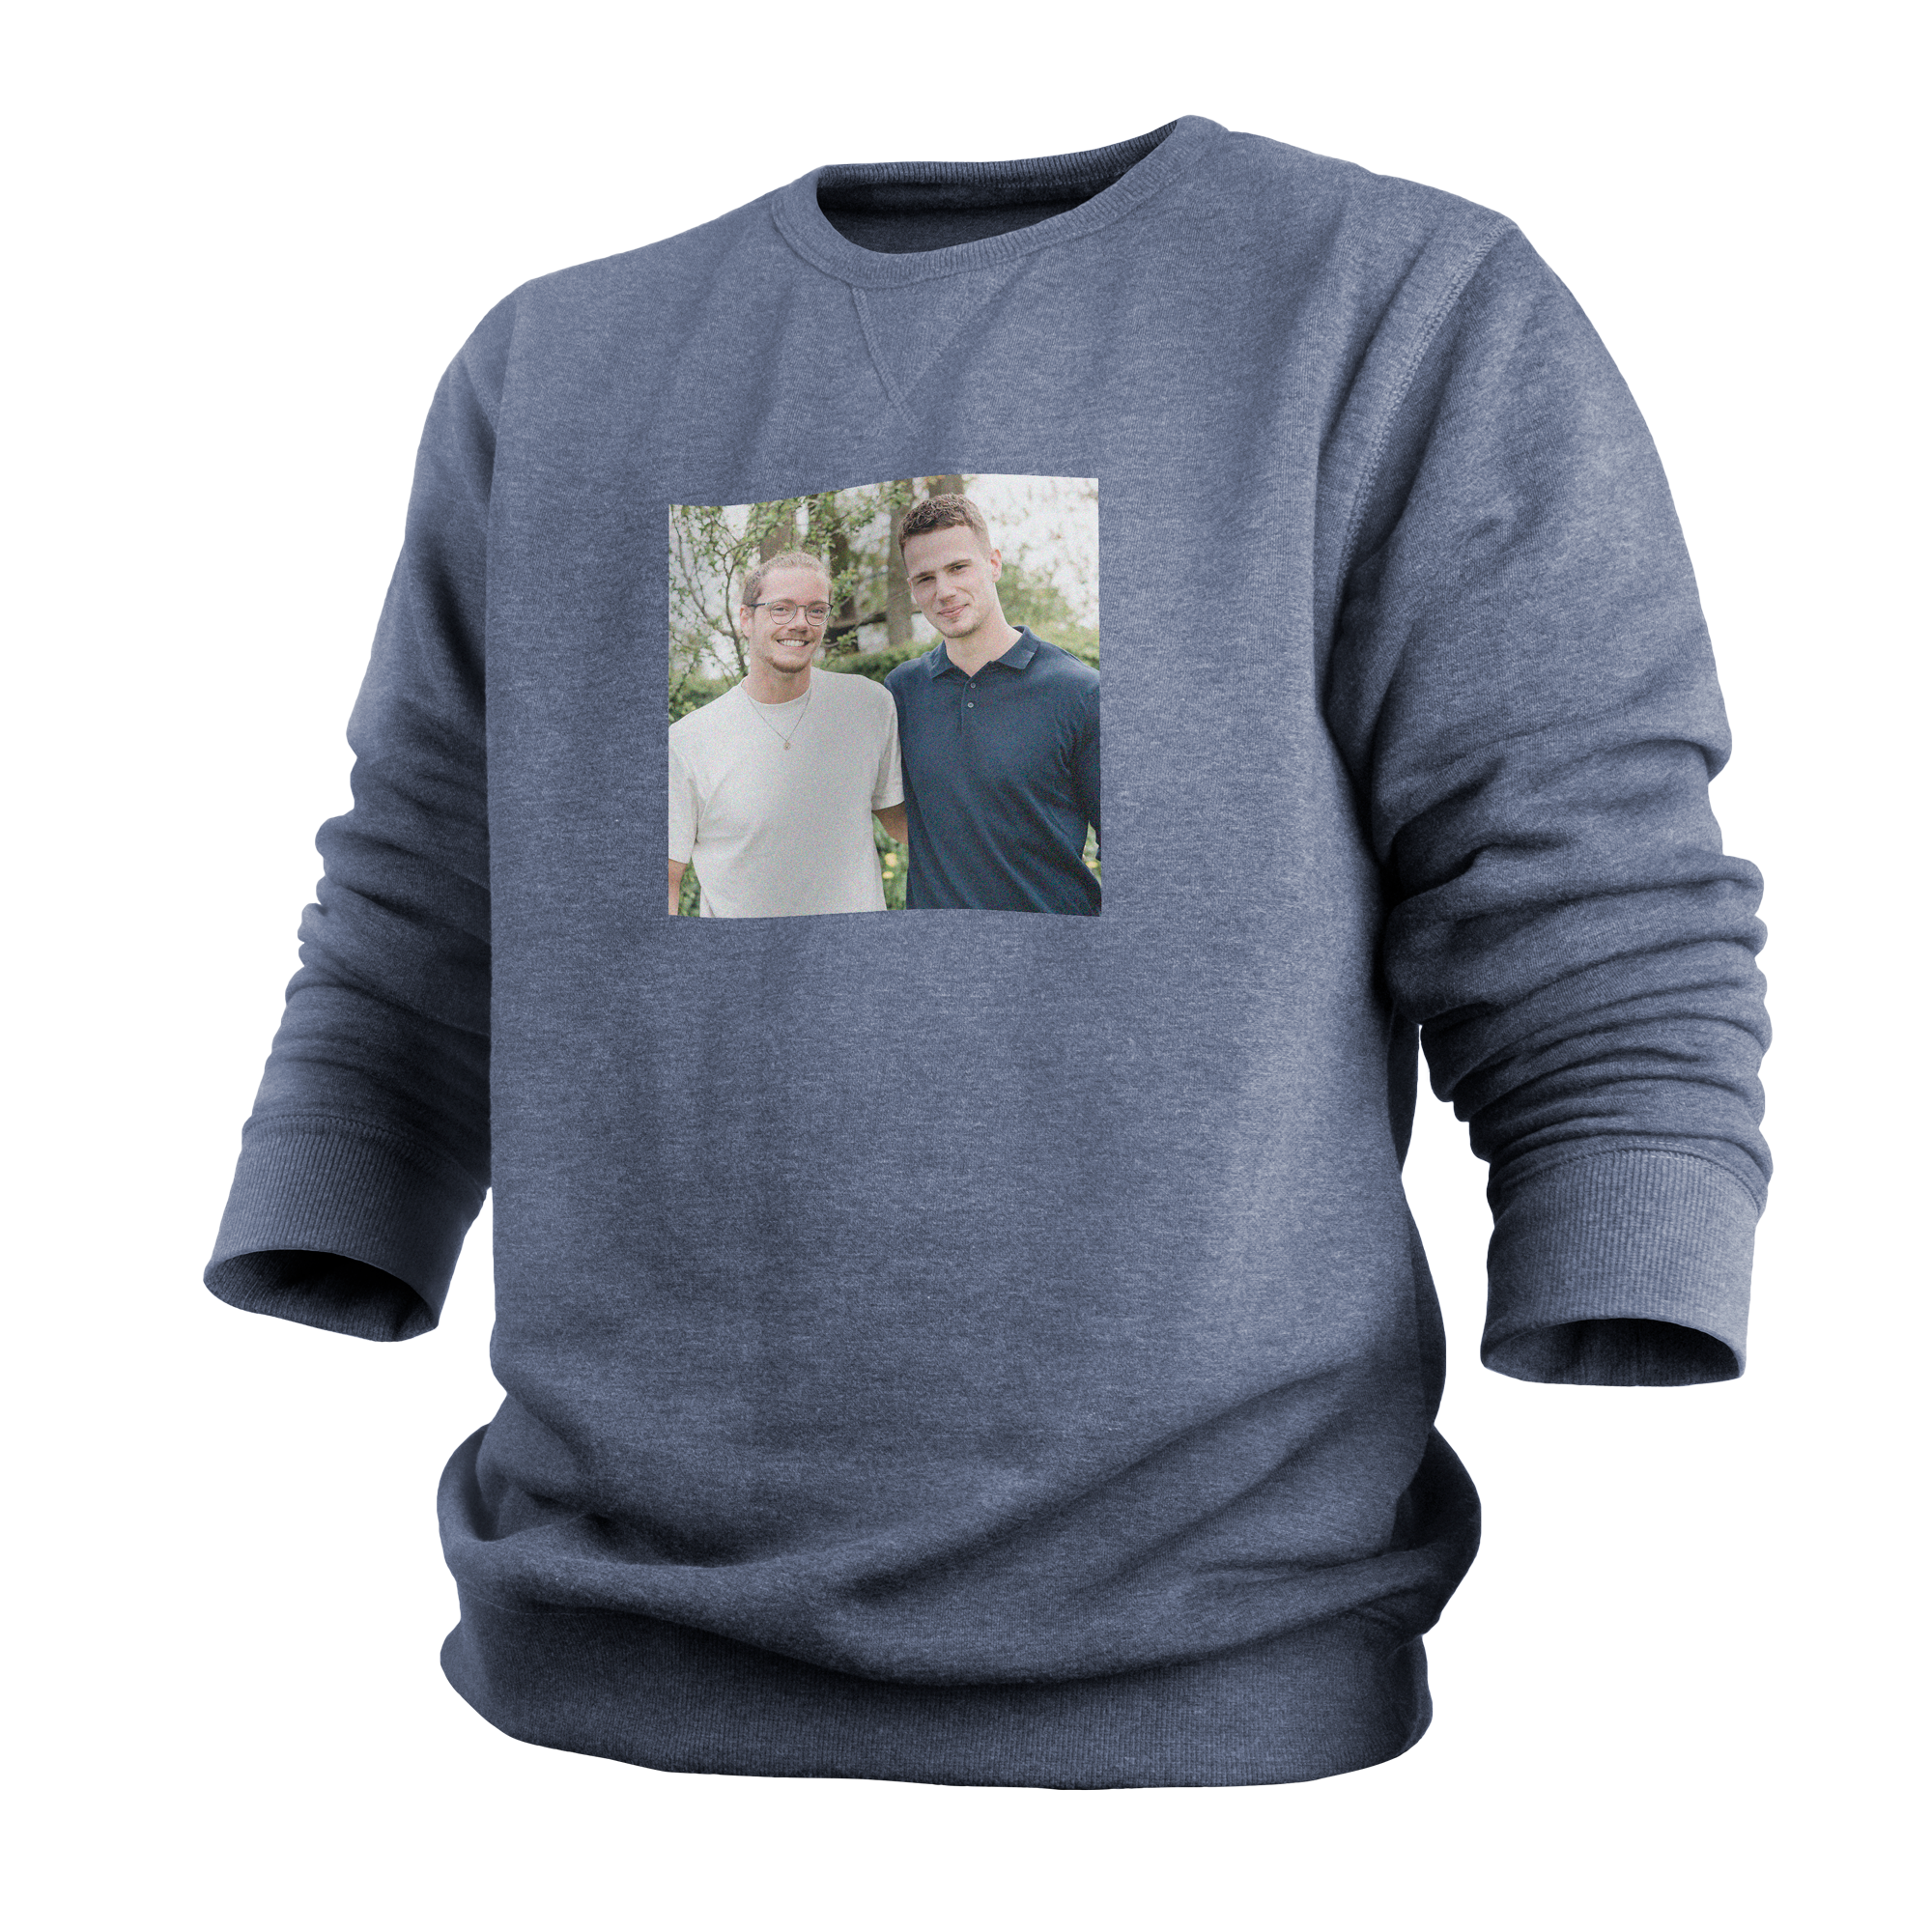 Sweatshirt personalizada - Homens - Indigo